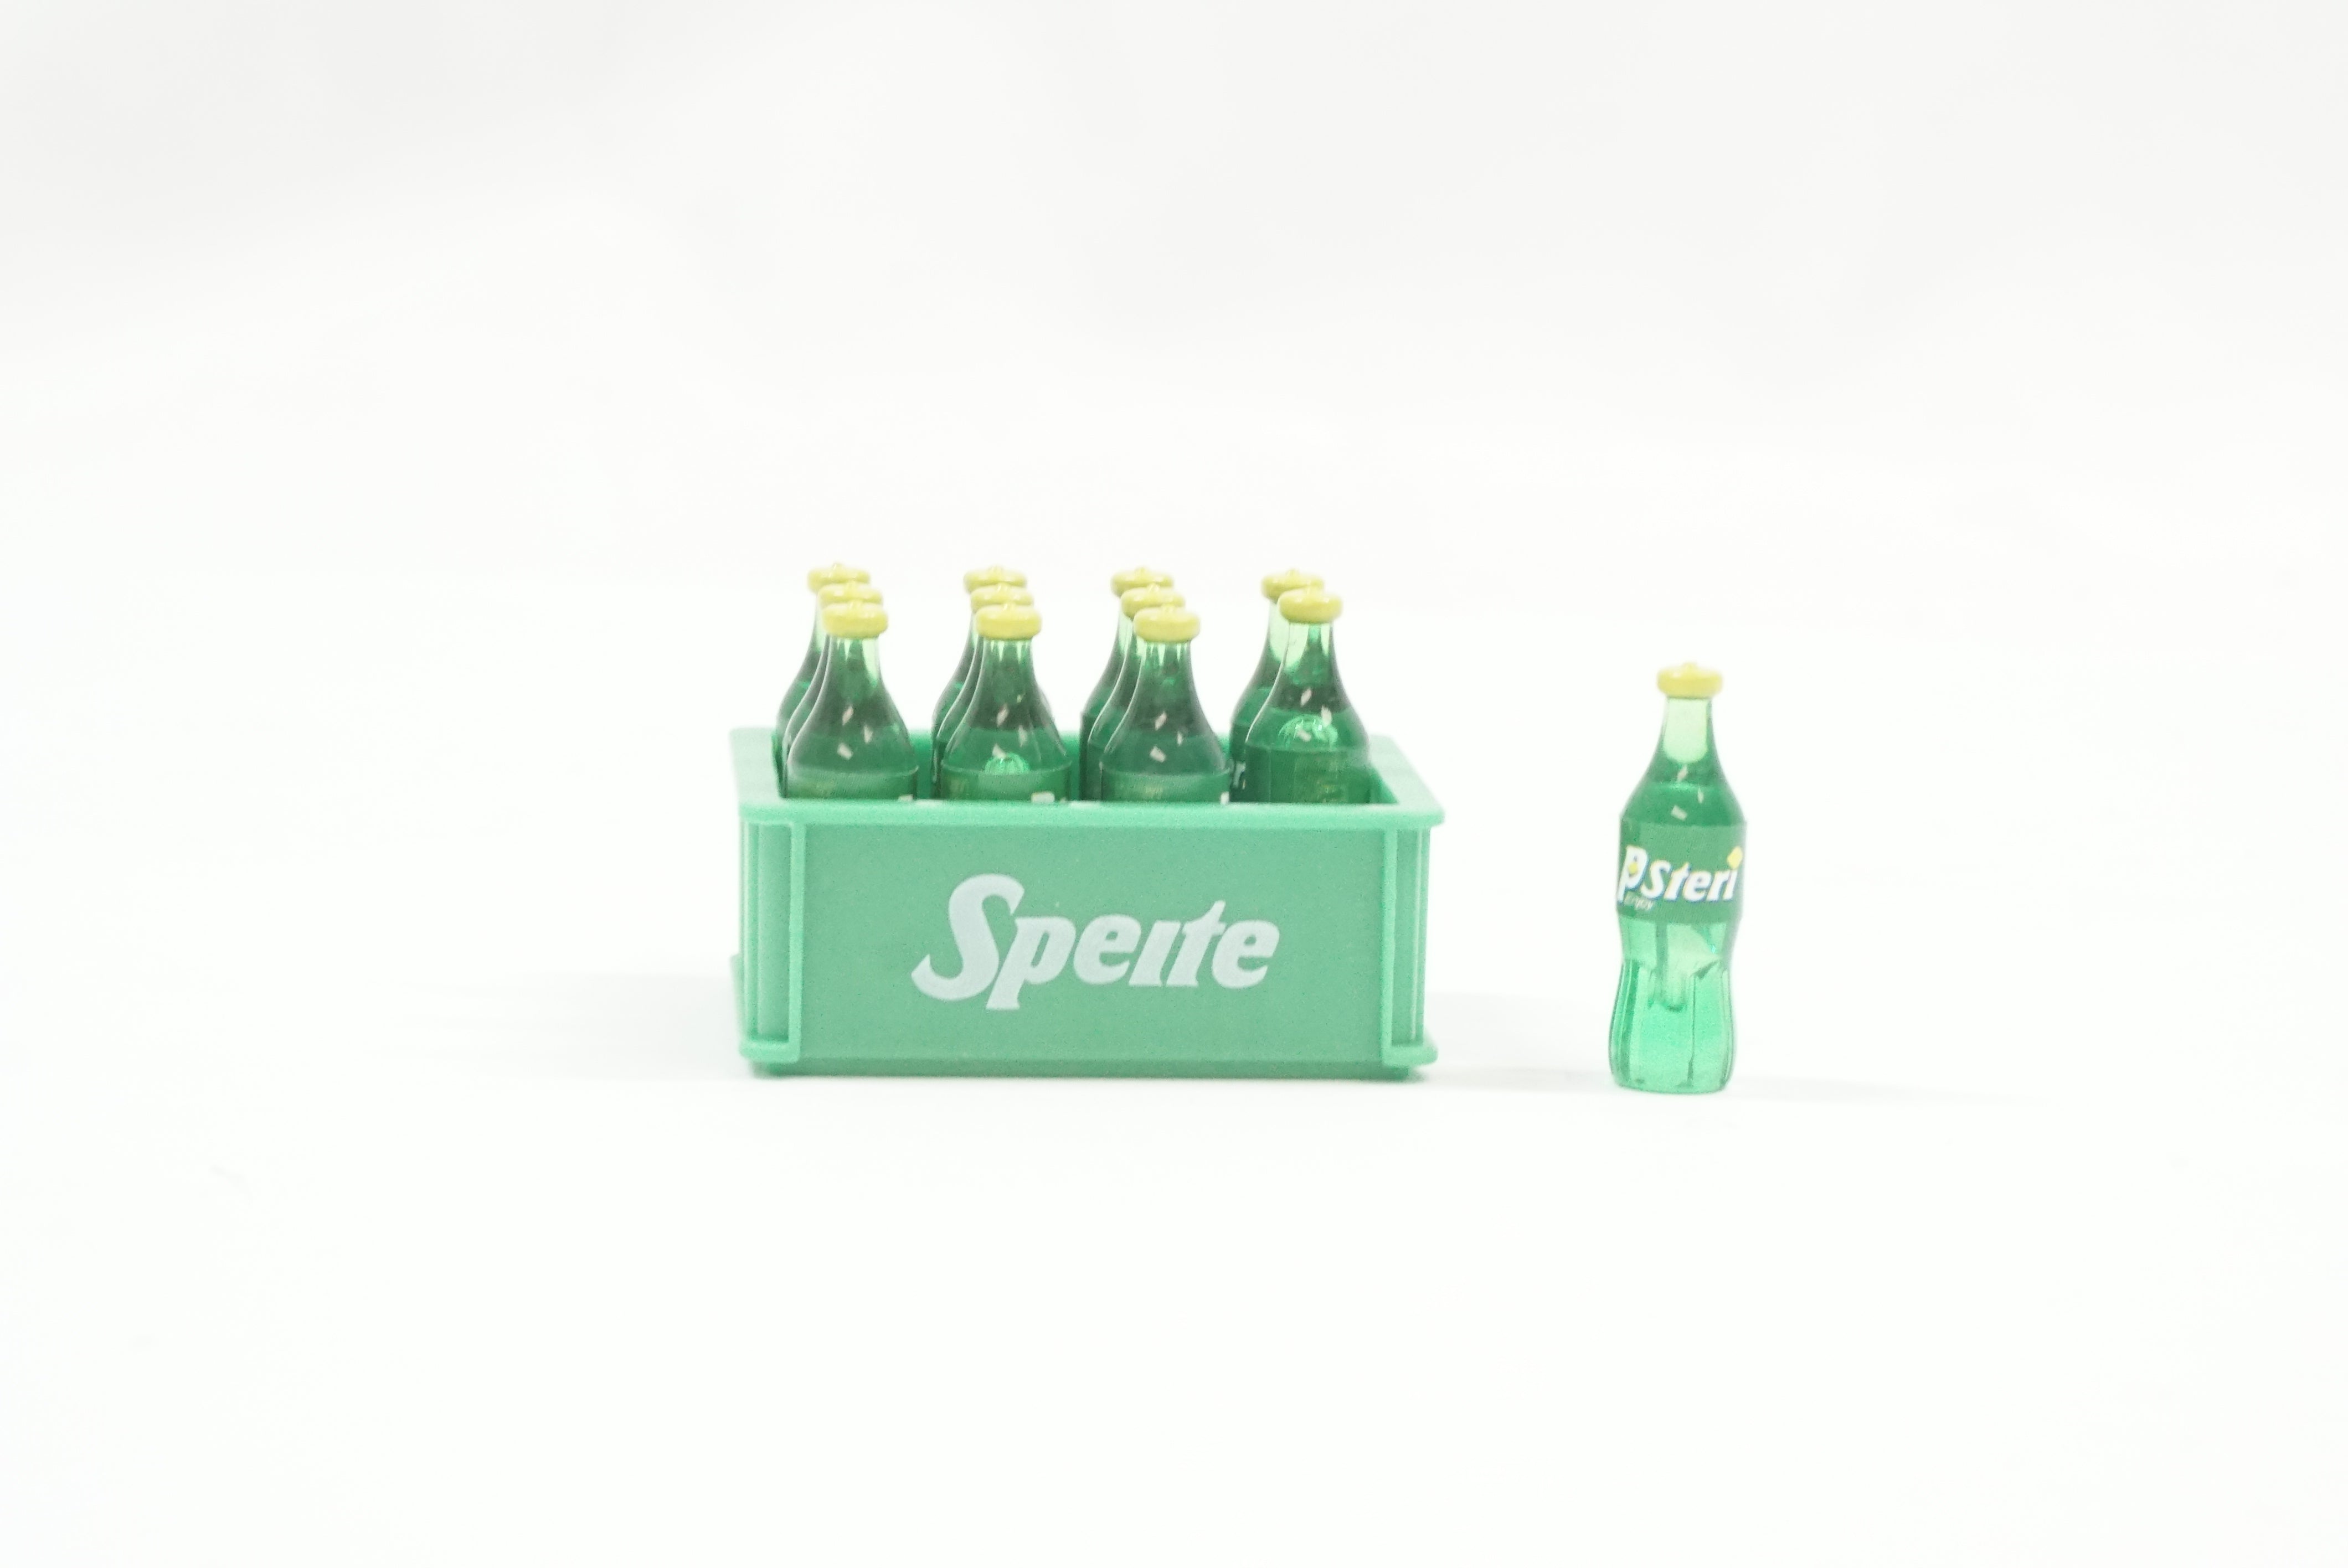 Off-brand Scale Sprite Crate